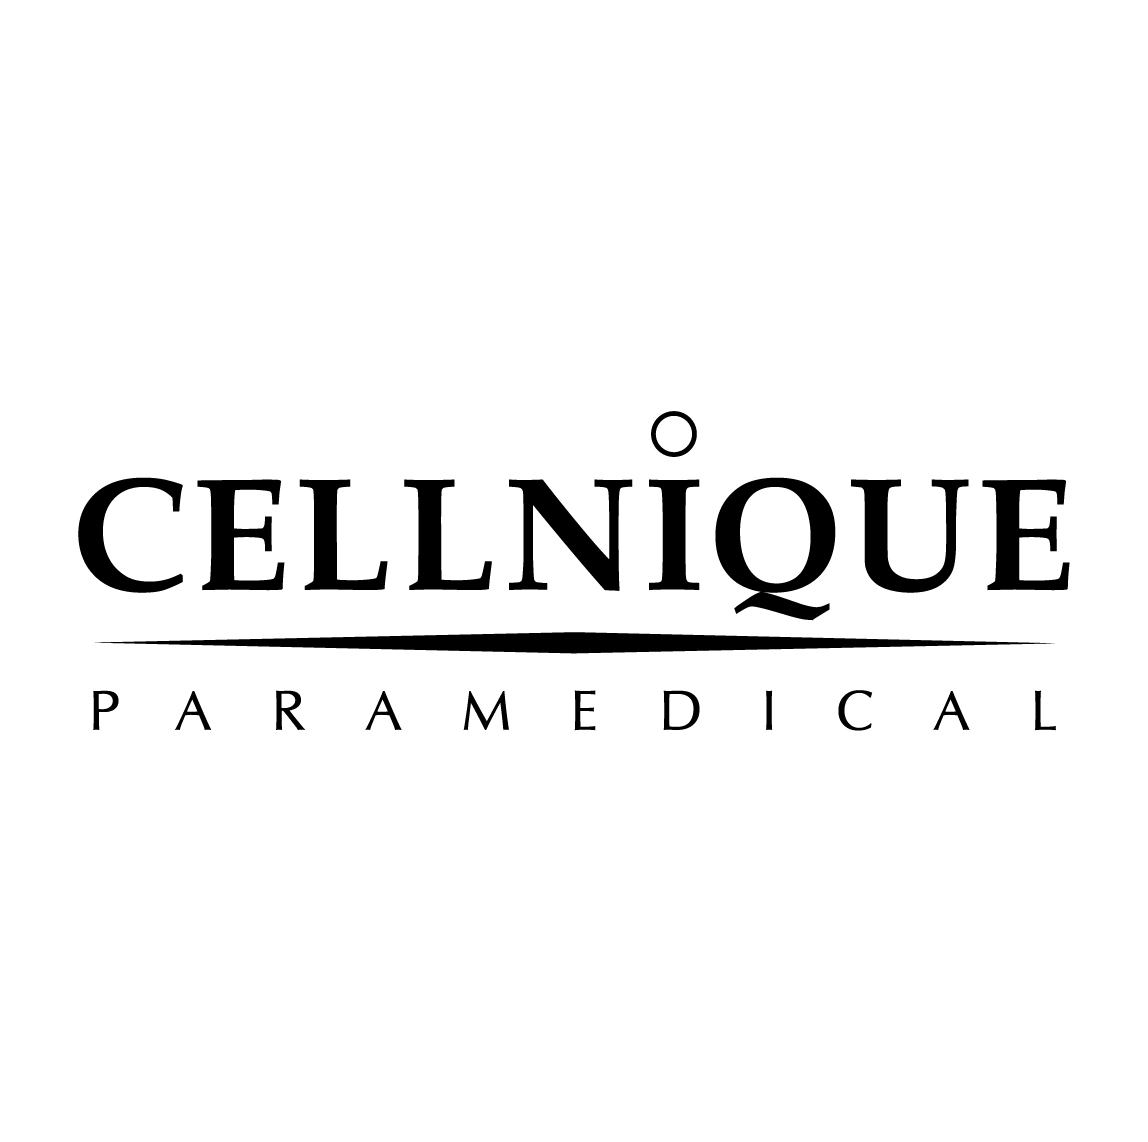 Cellnique logo1 - Homepage